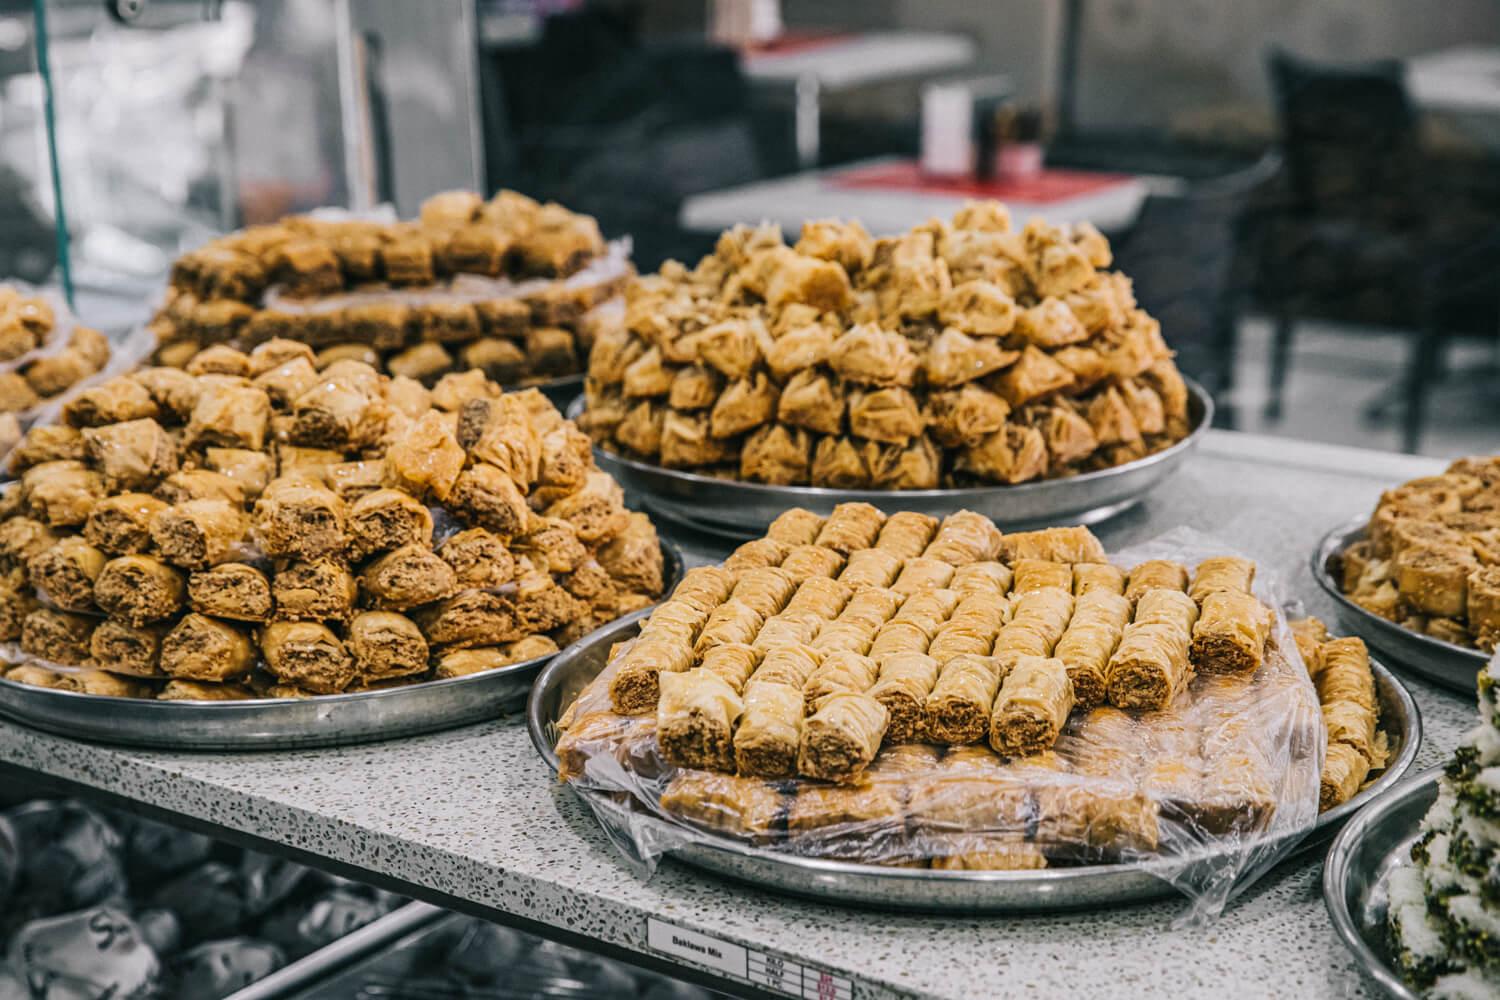 Lebanese Pastries